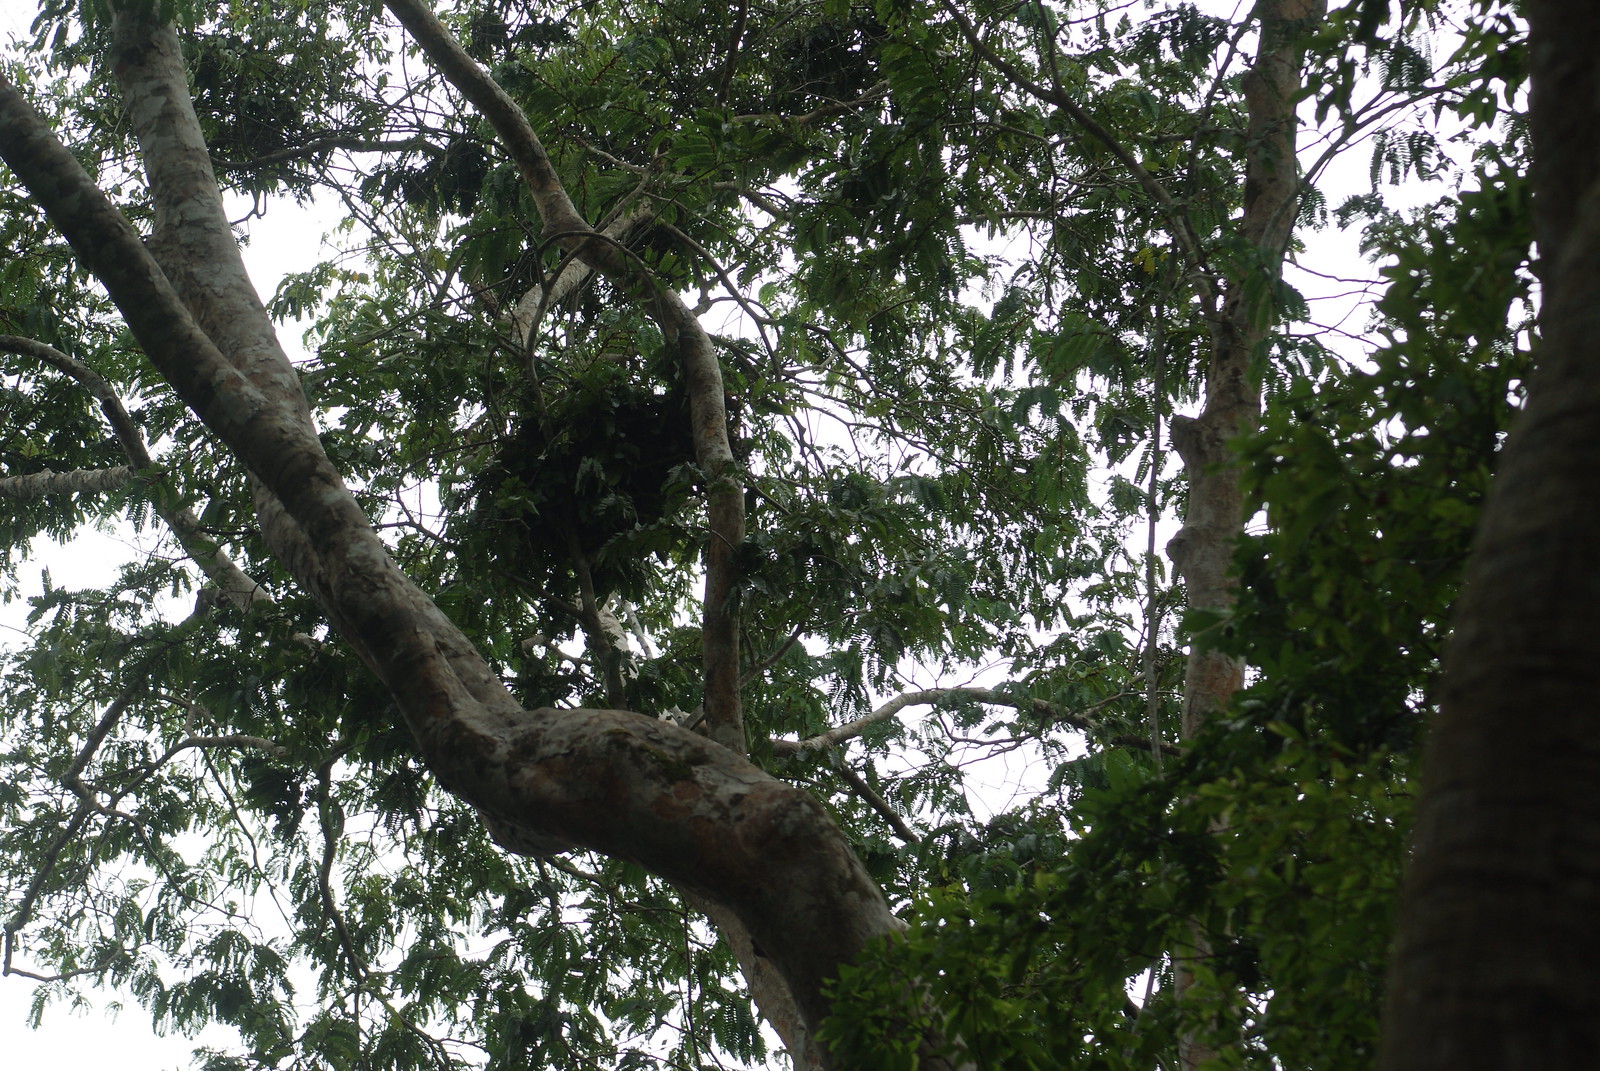 photo of chimpanzee nest in mango tree